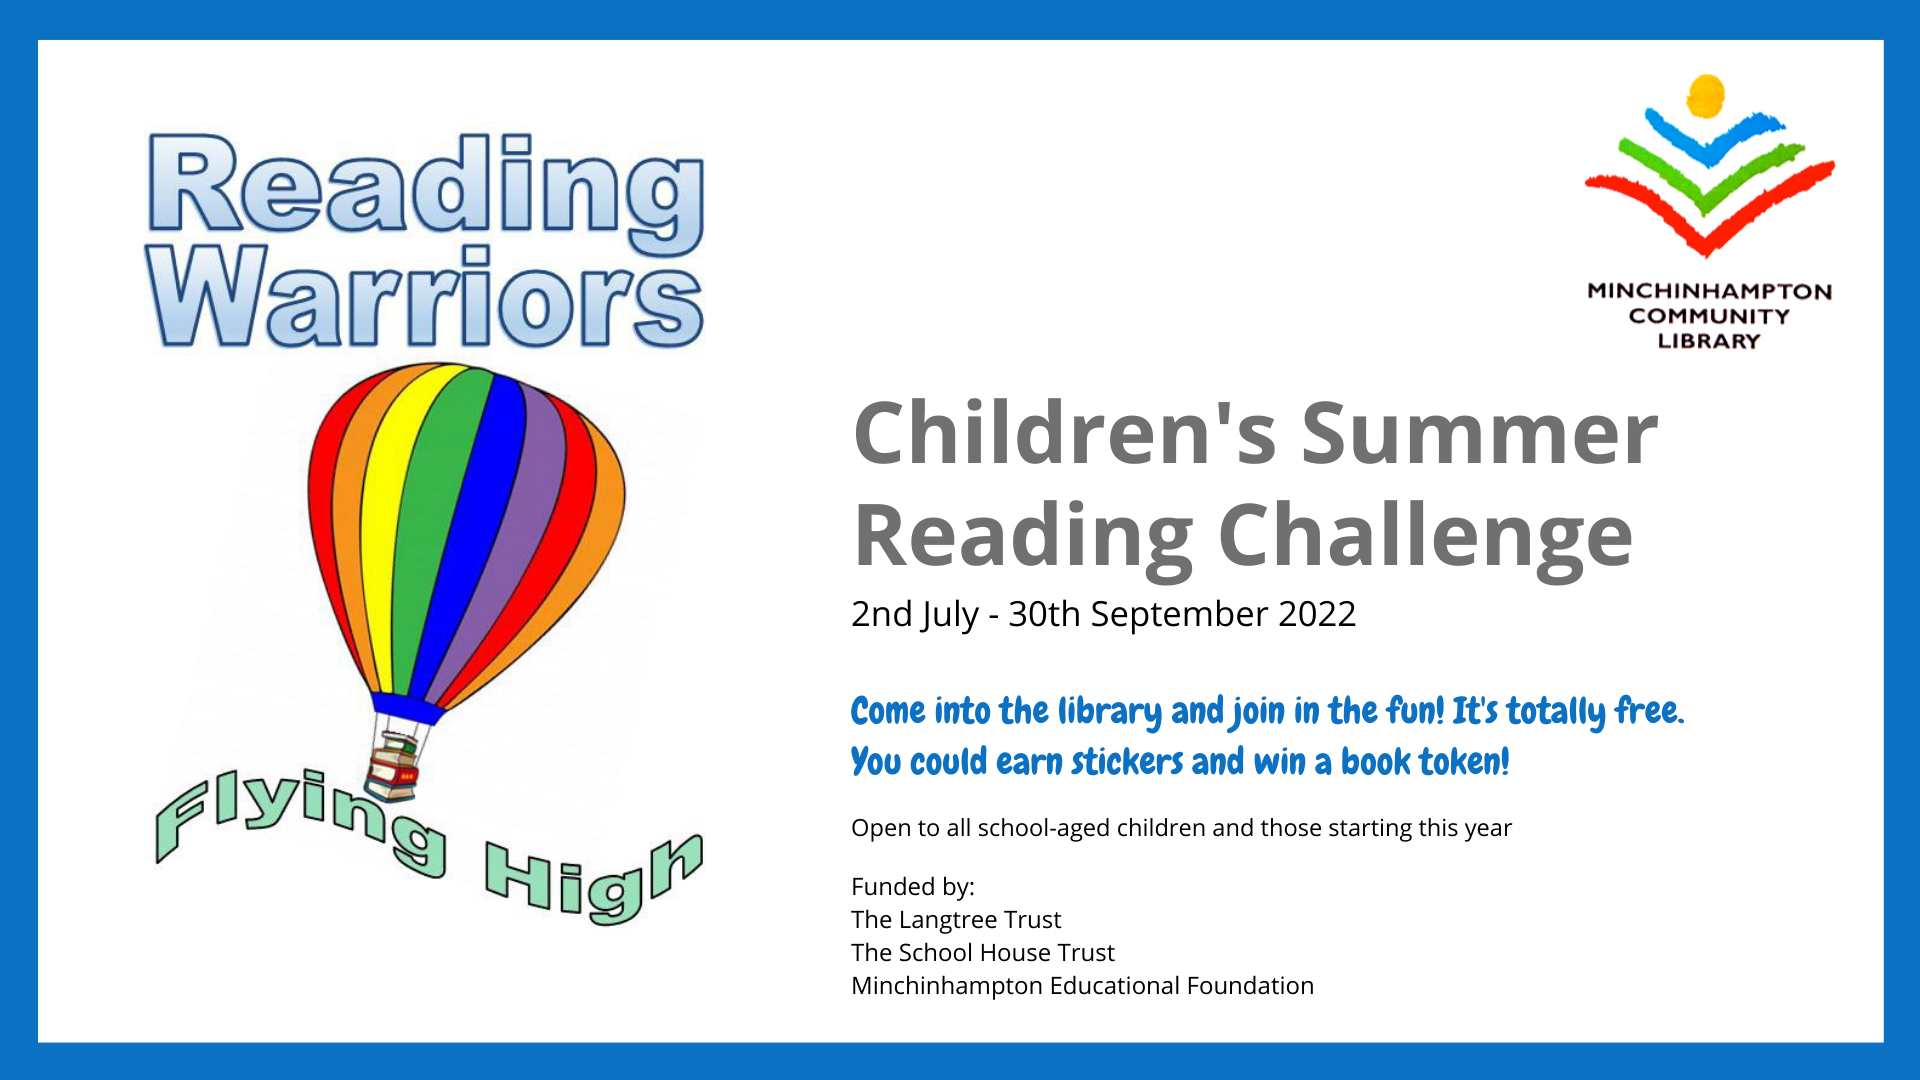 Minchinhampton Community Library Summer Reading Challenge